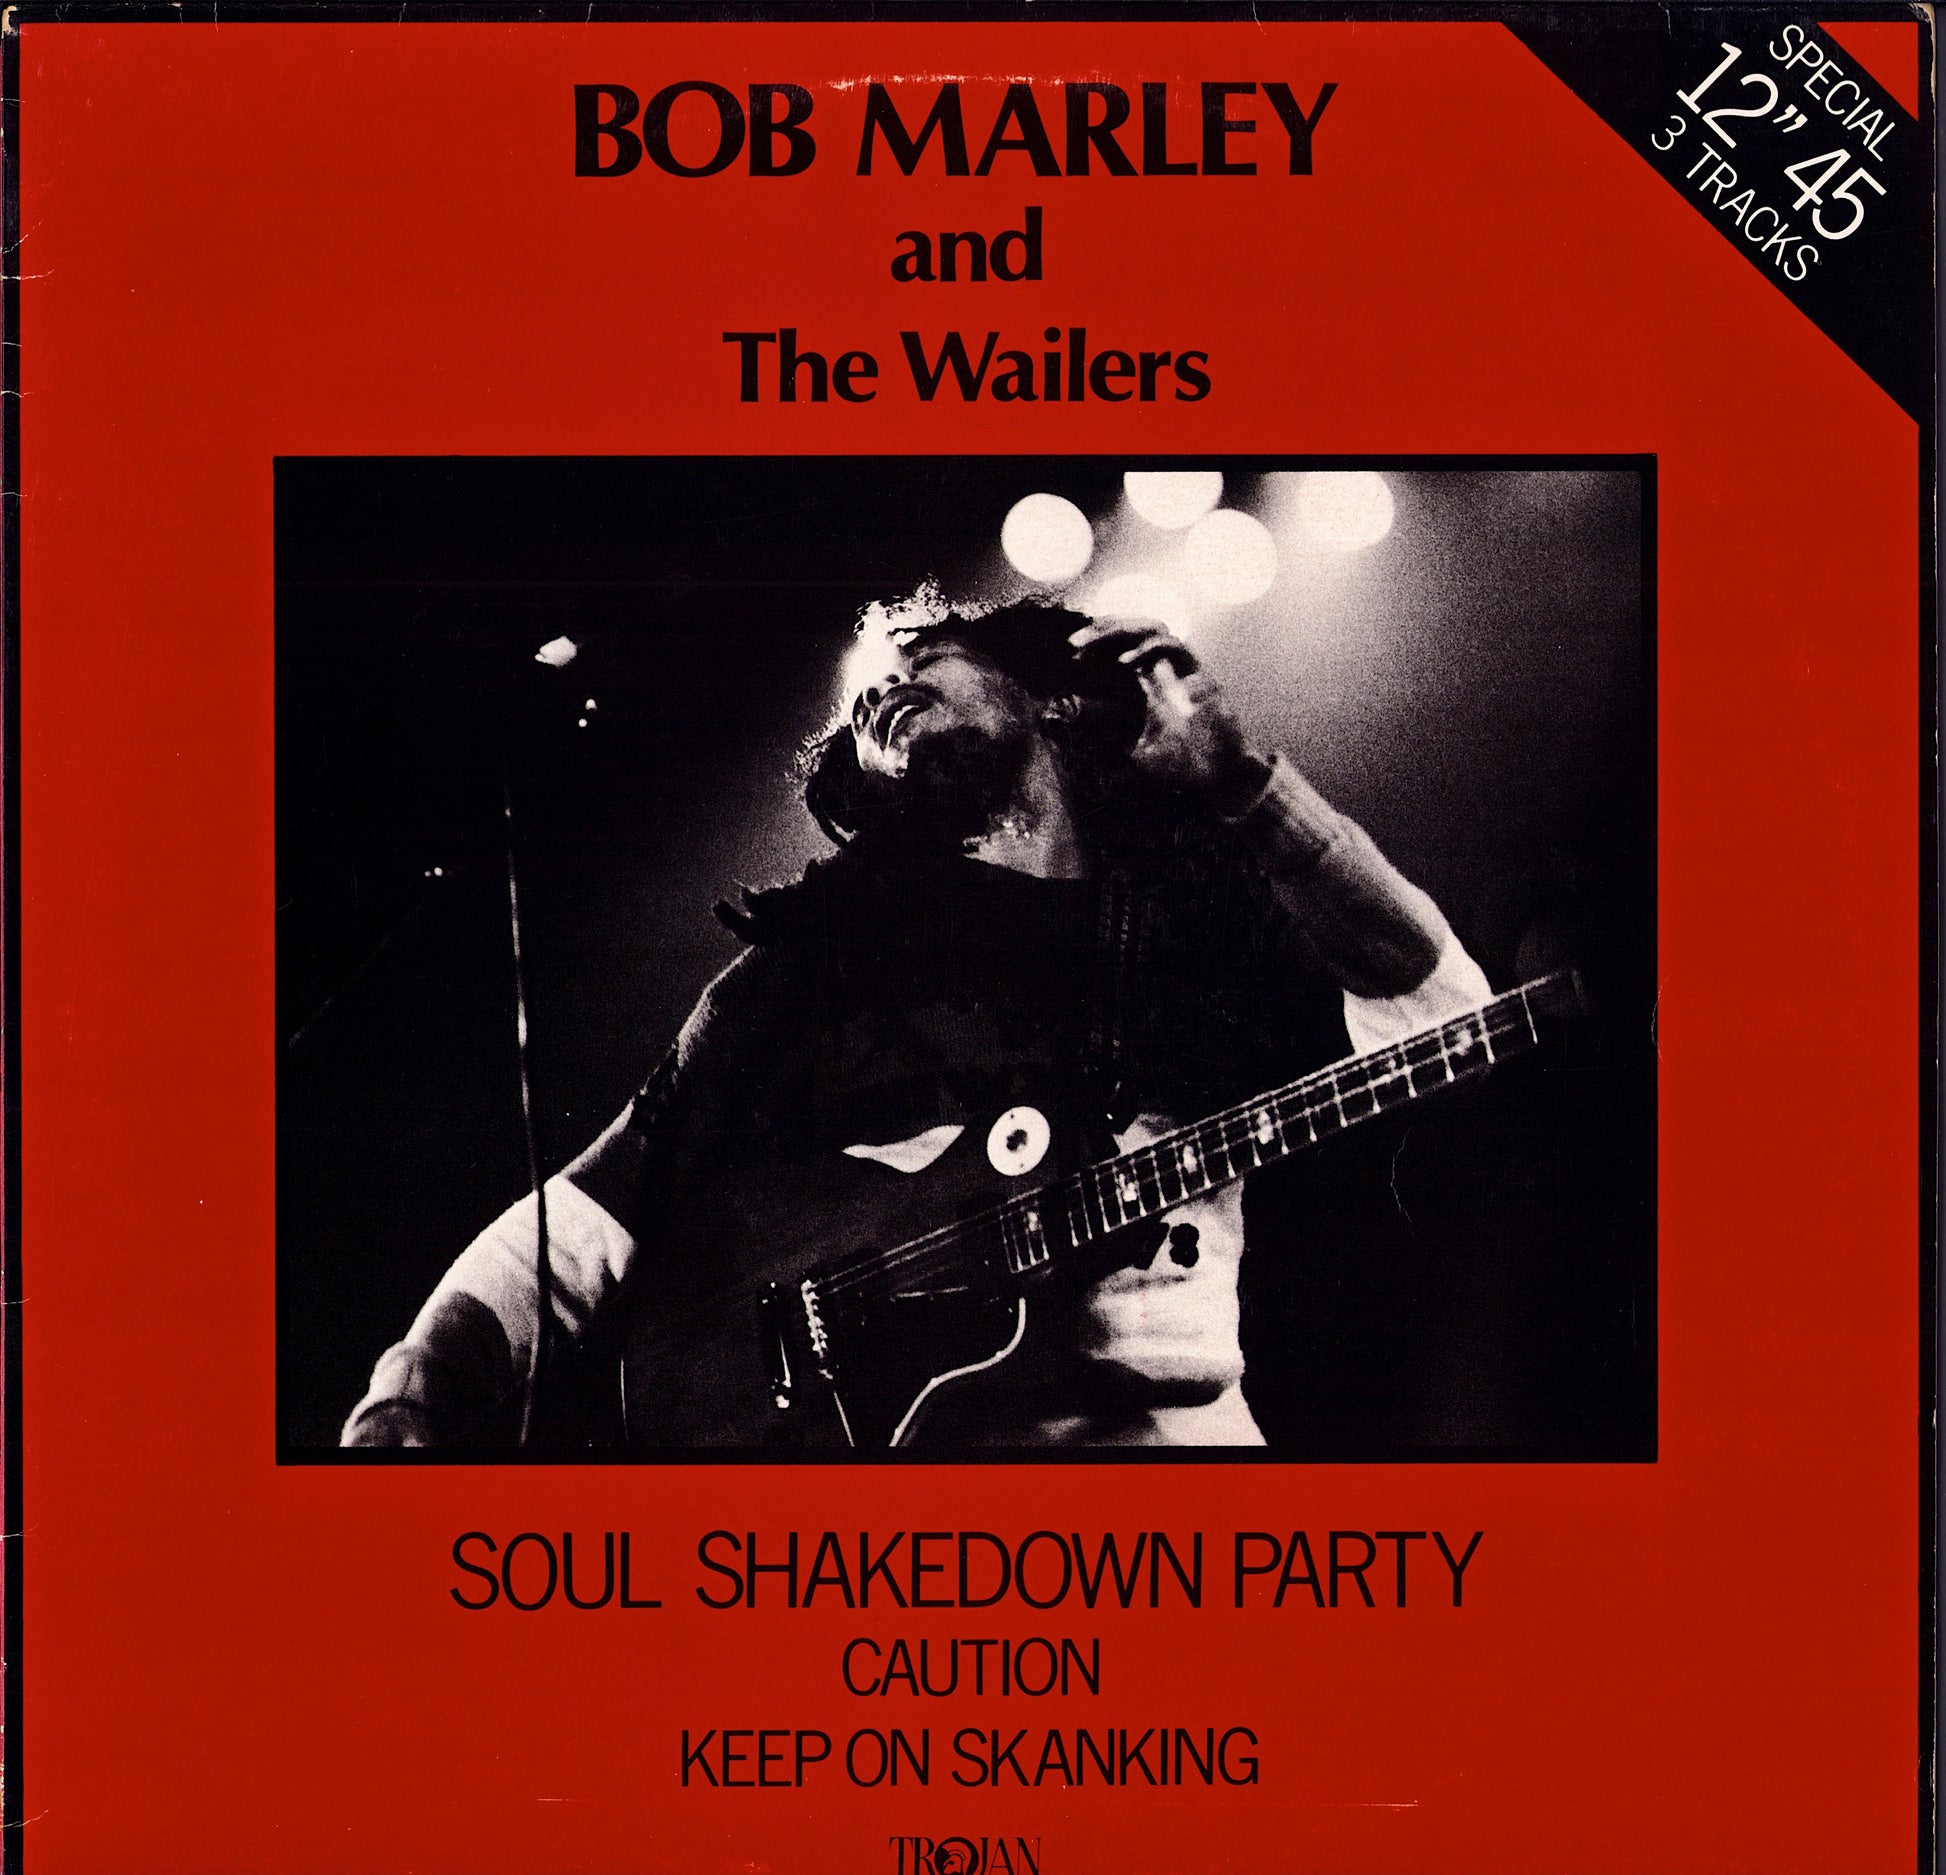 Bob Marley & The Wailers ‎- Soul Shakedown Party Vinyl 12" Maxi-Single